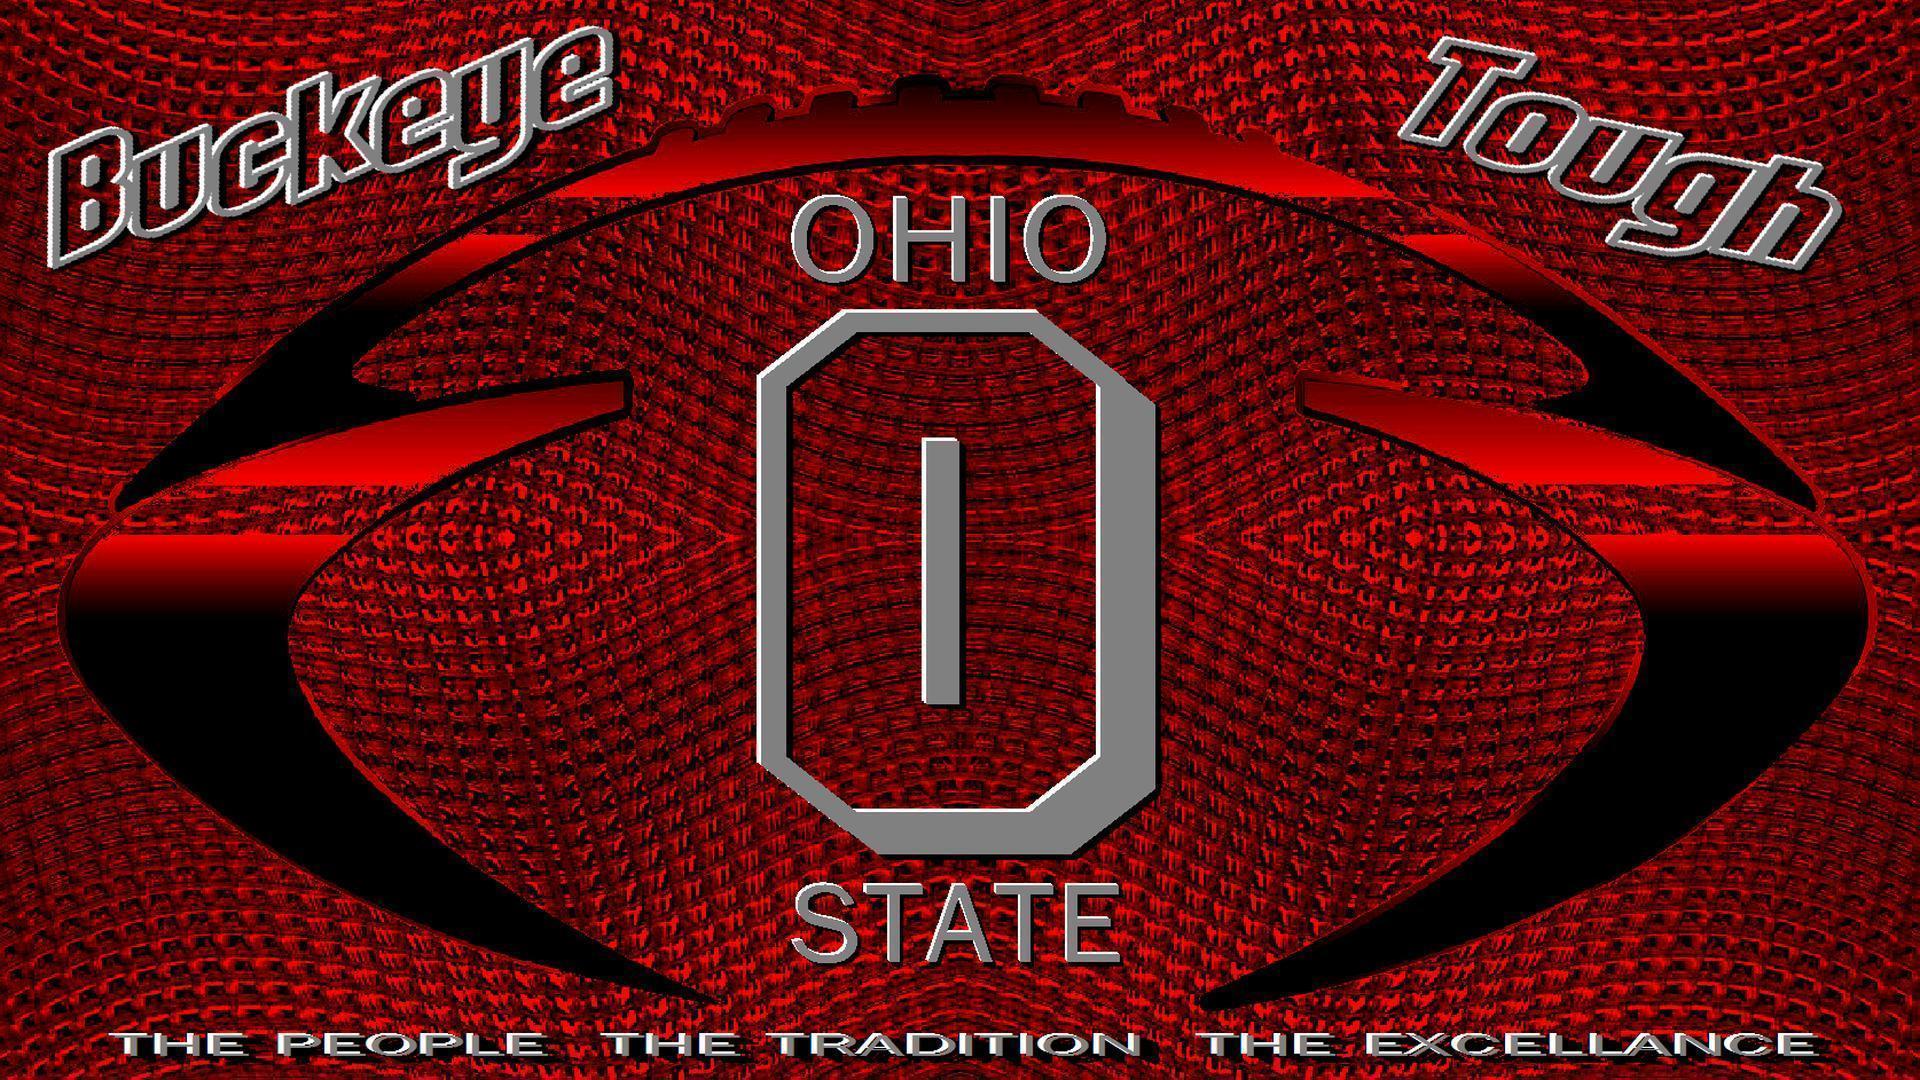 Ohio State Football Logo 16, Photo, Image in High